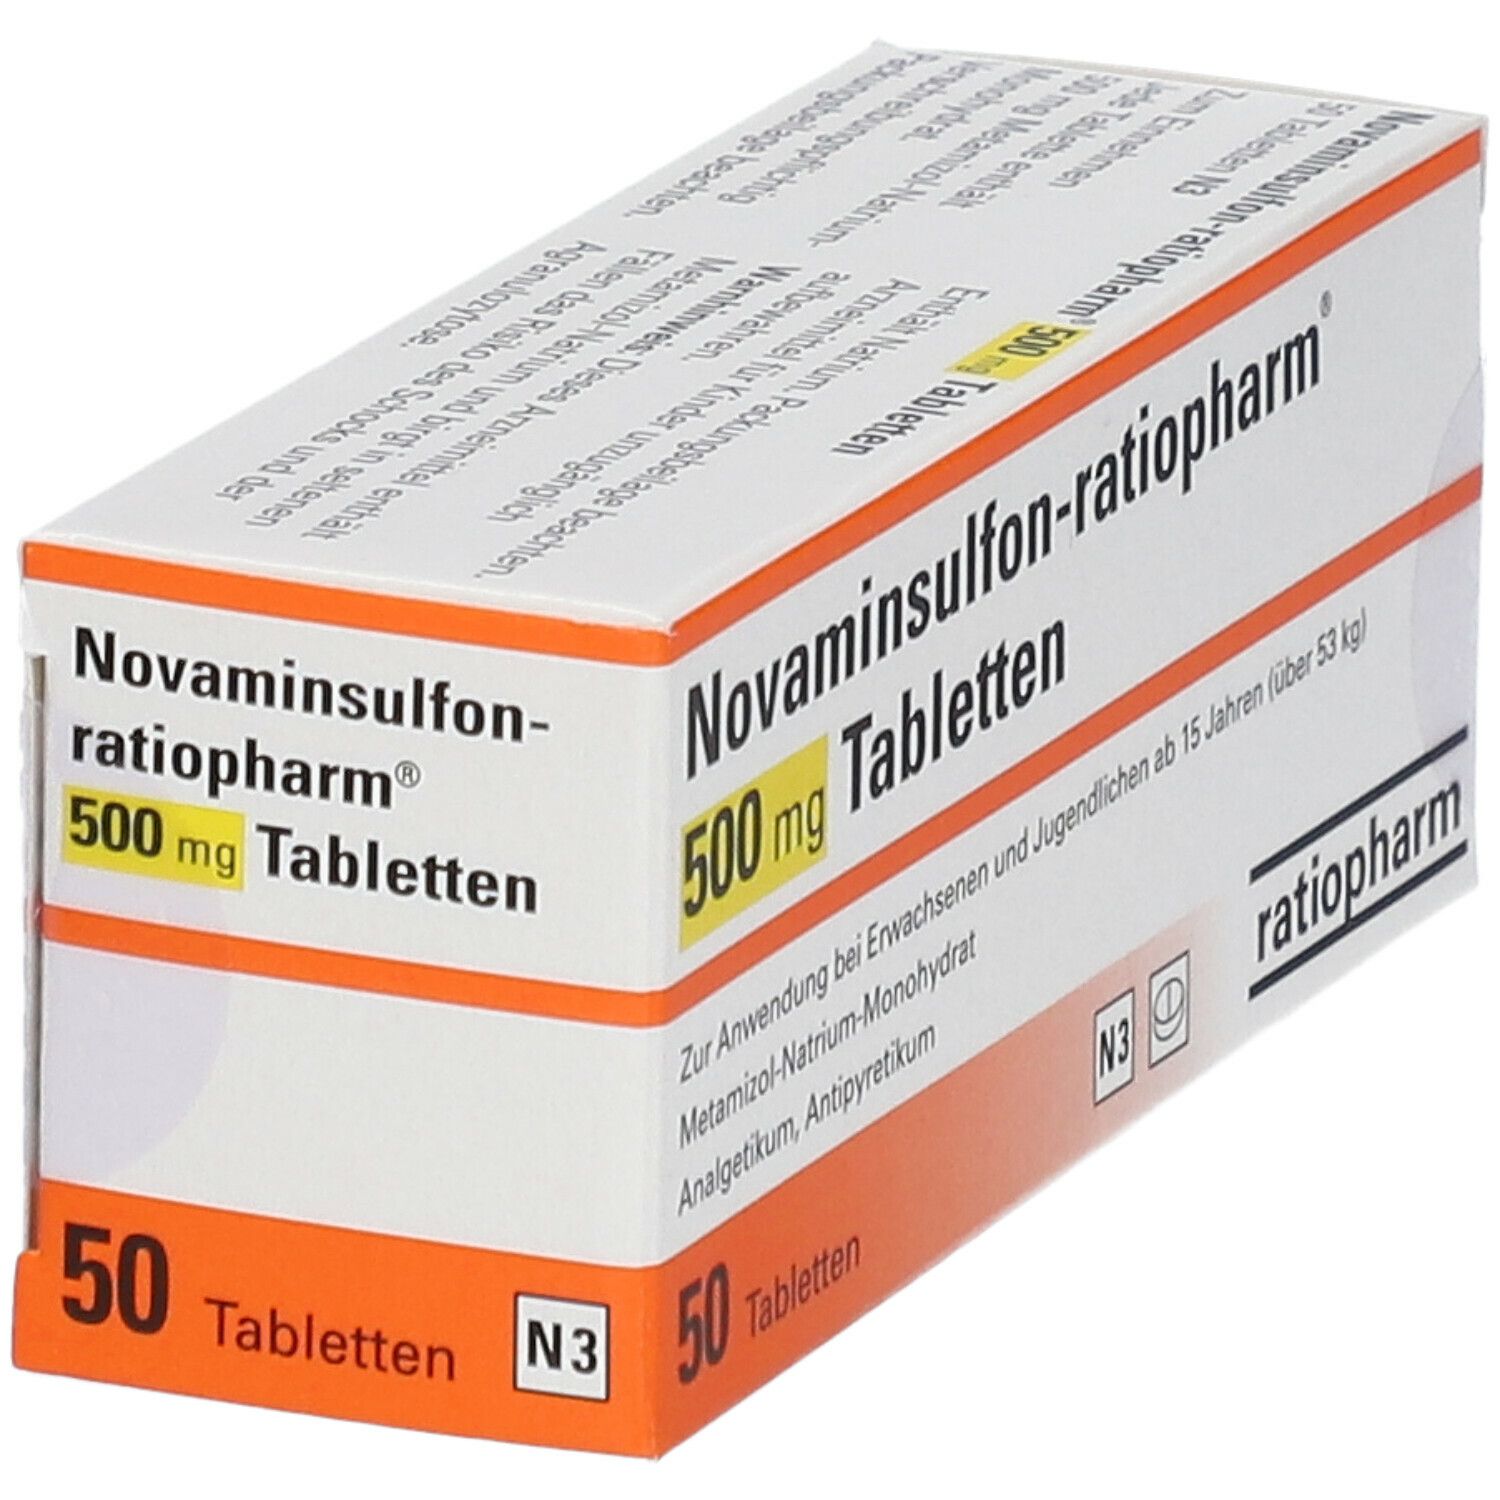 Novaminsulfon-ratiopharm ® 500 mg 50 St - shop-apotheke.com